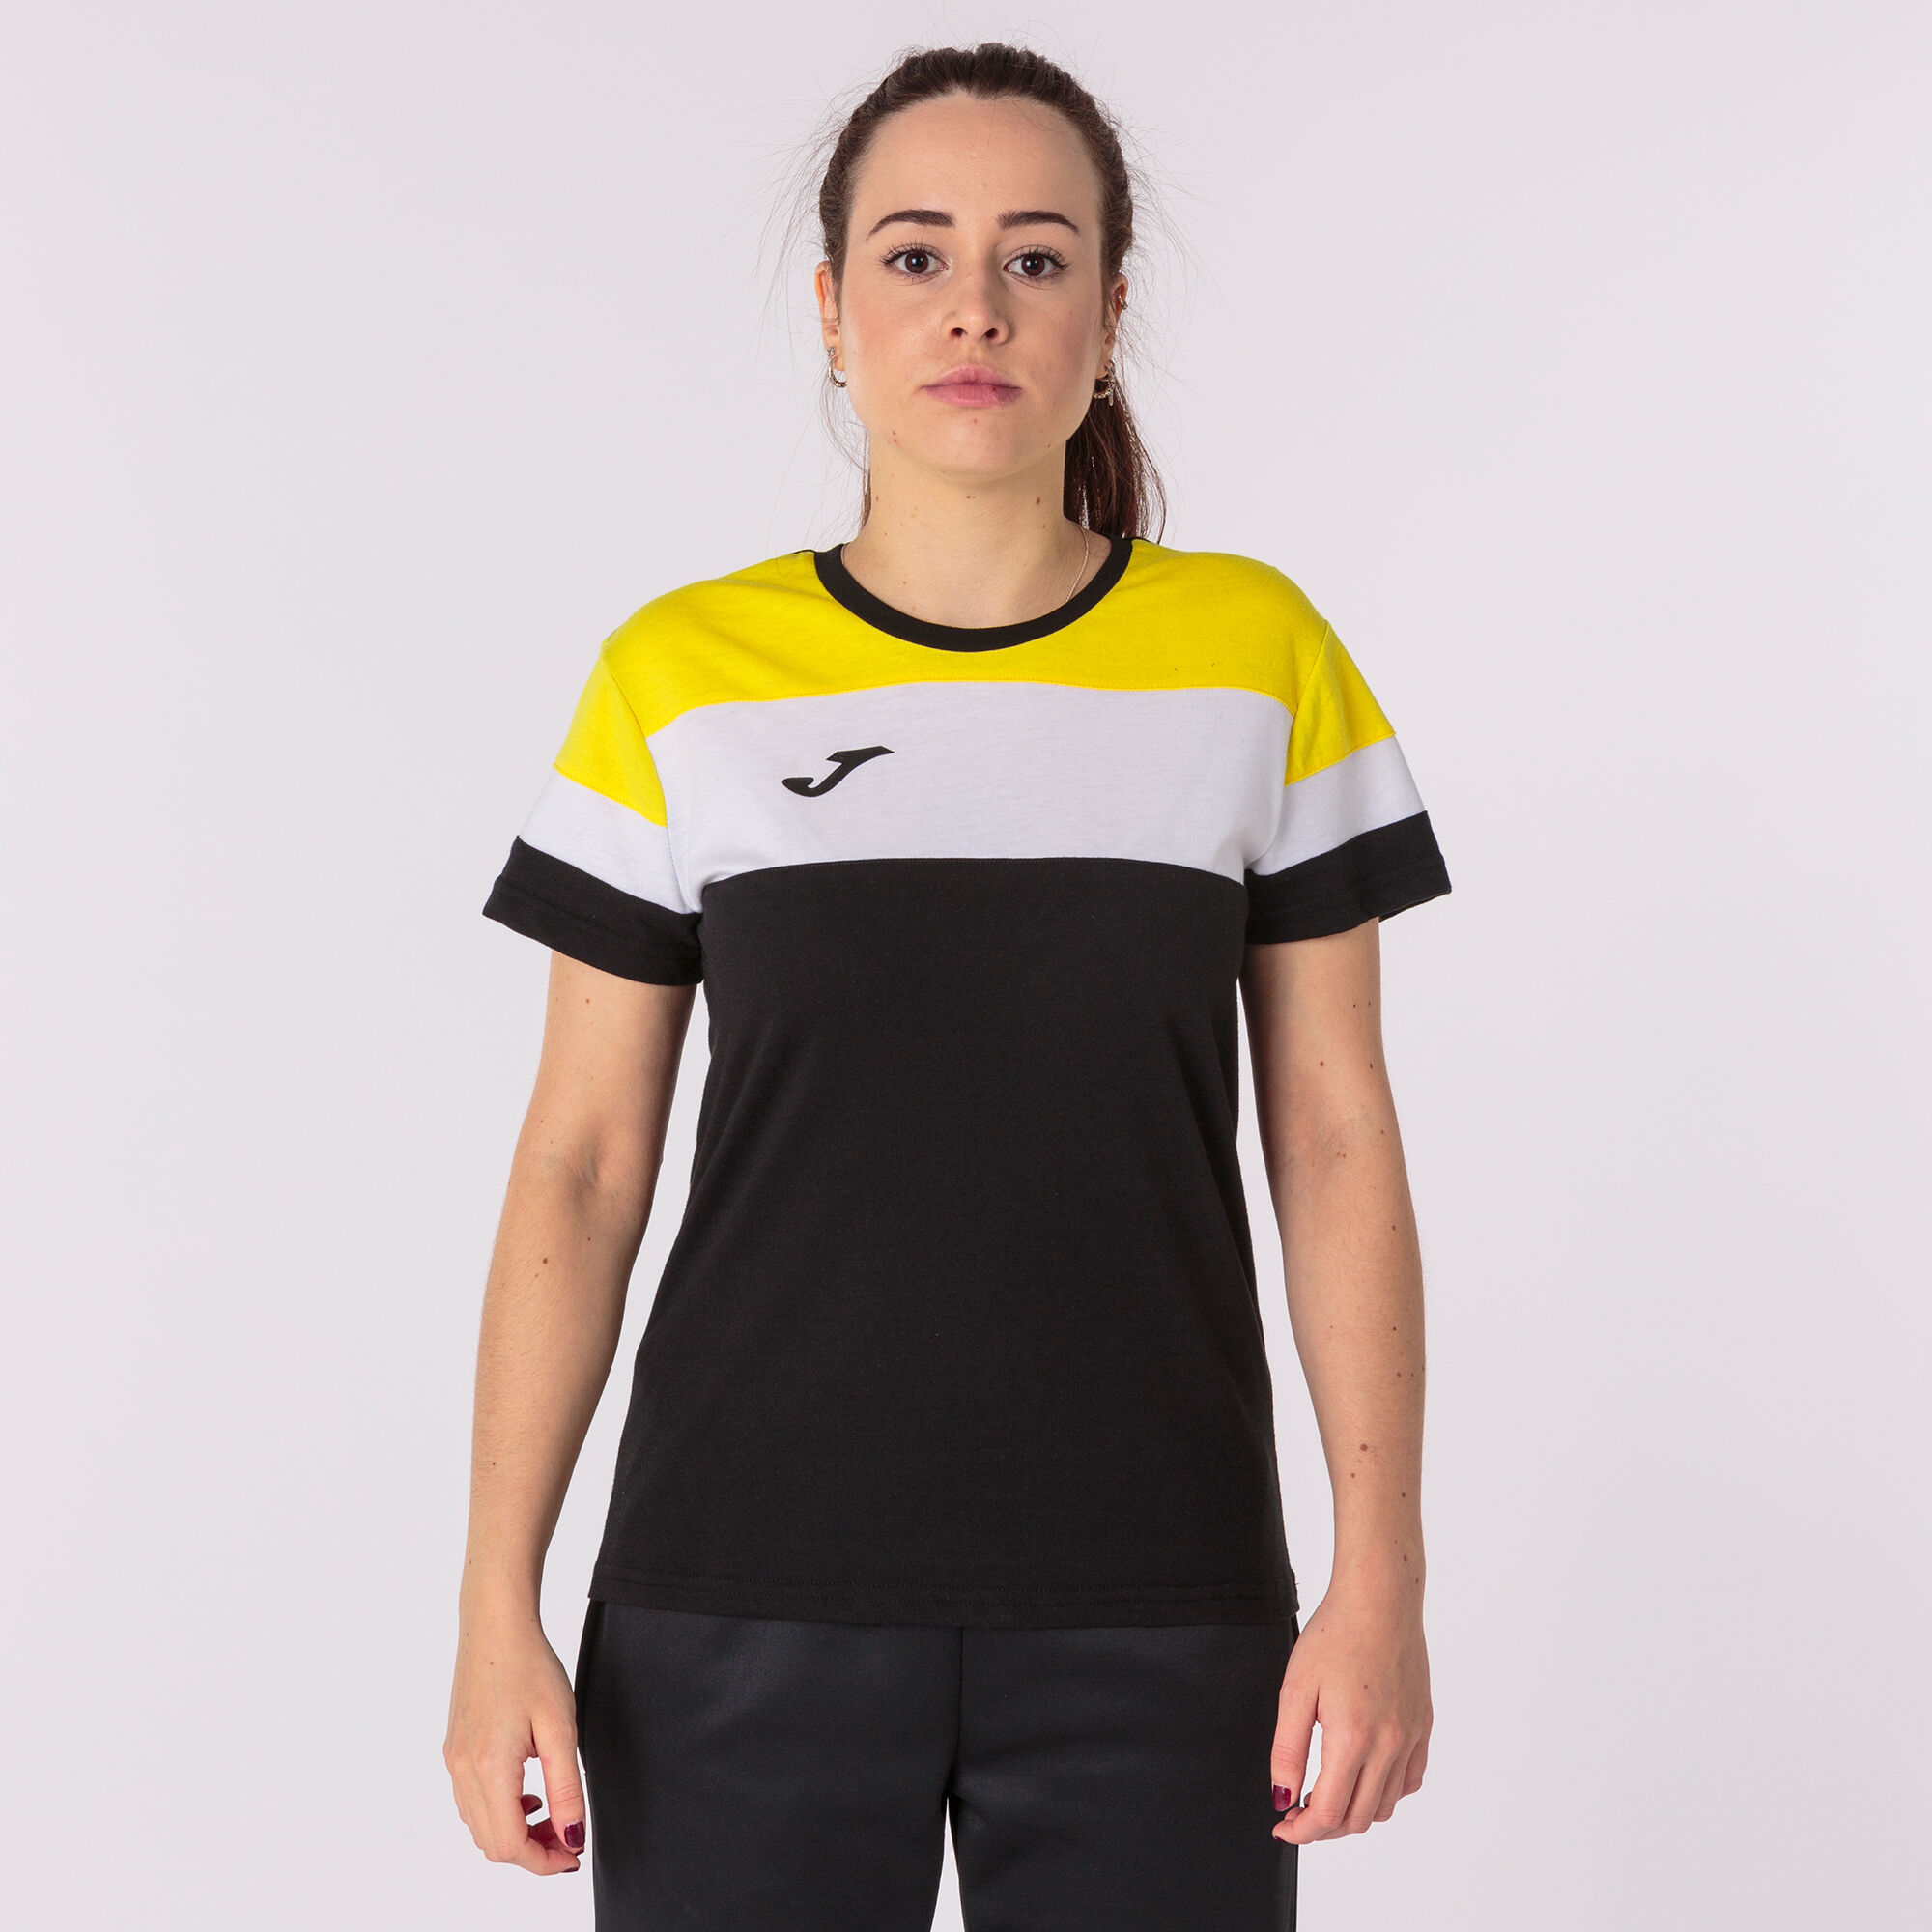 Shirt short sleeve woman Crew IV black yellow white